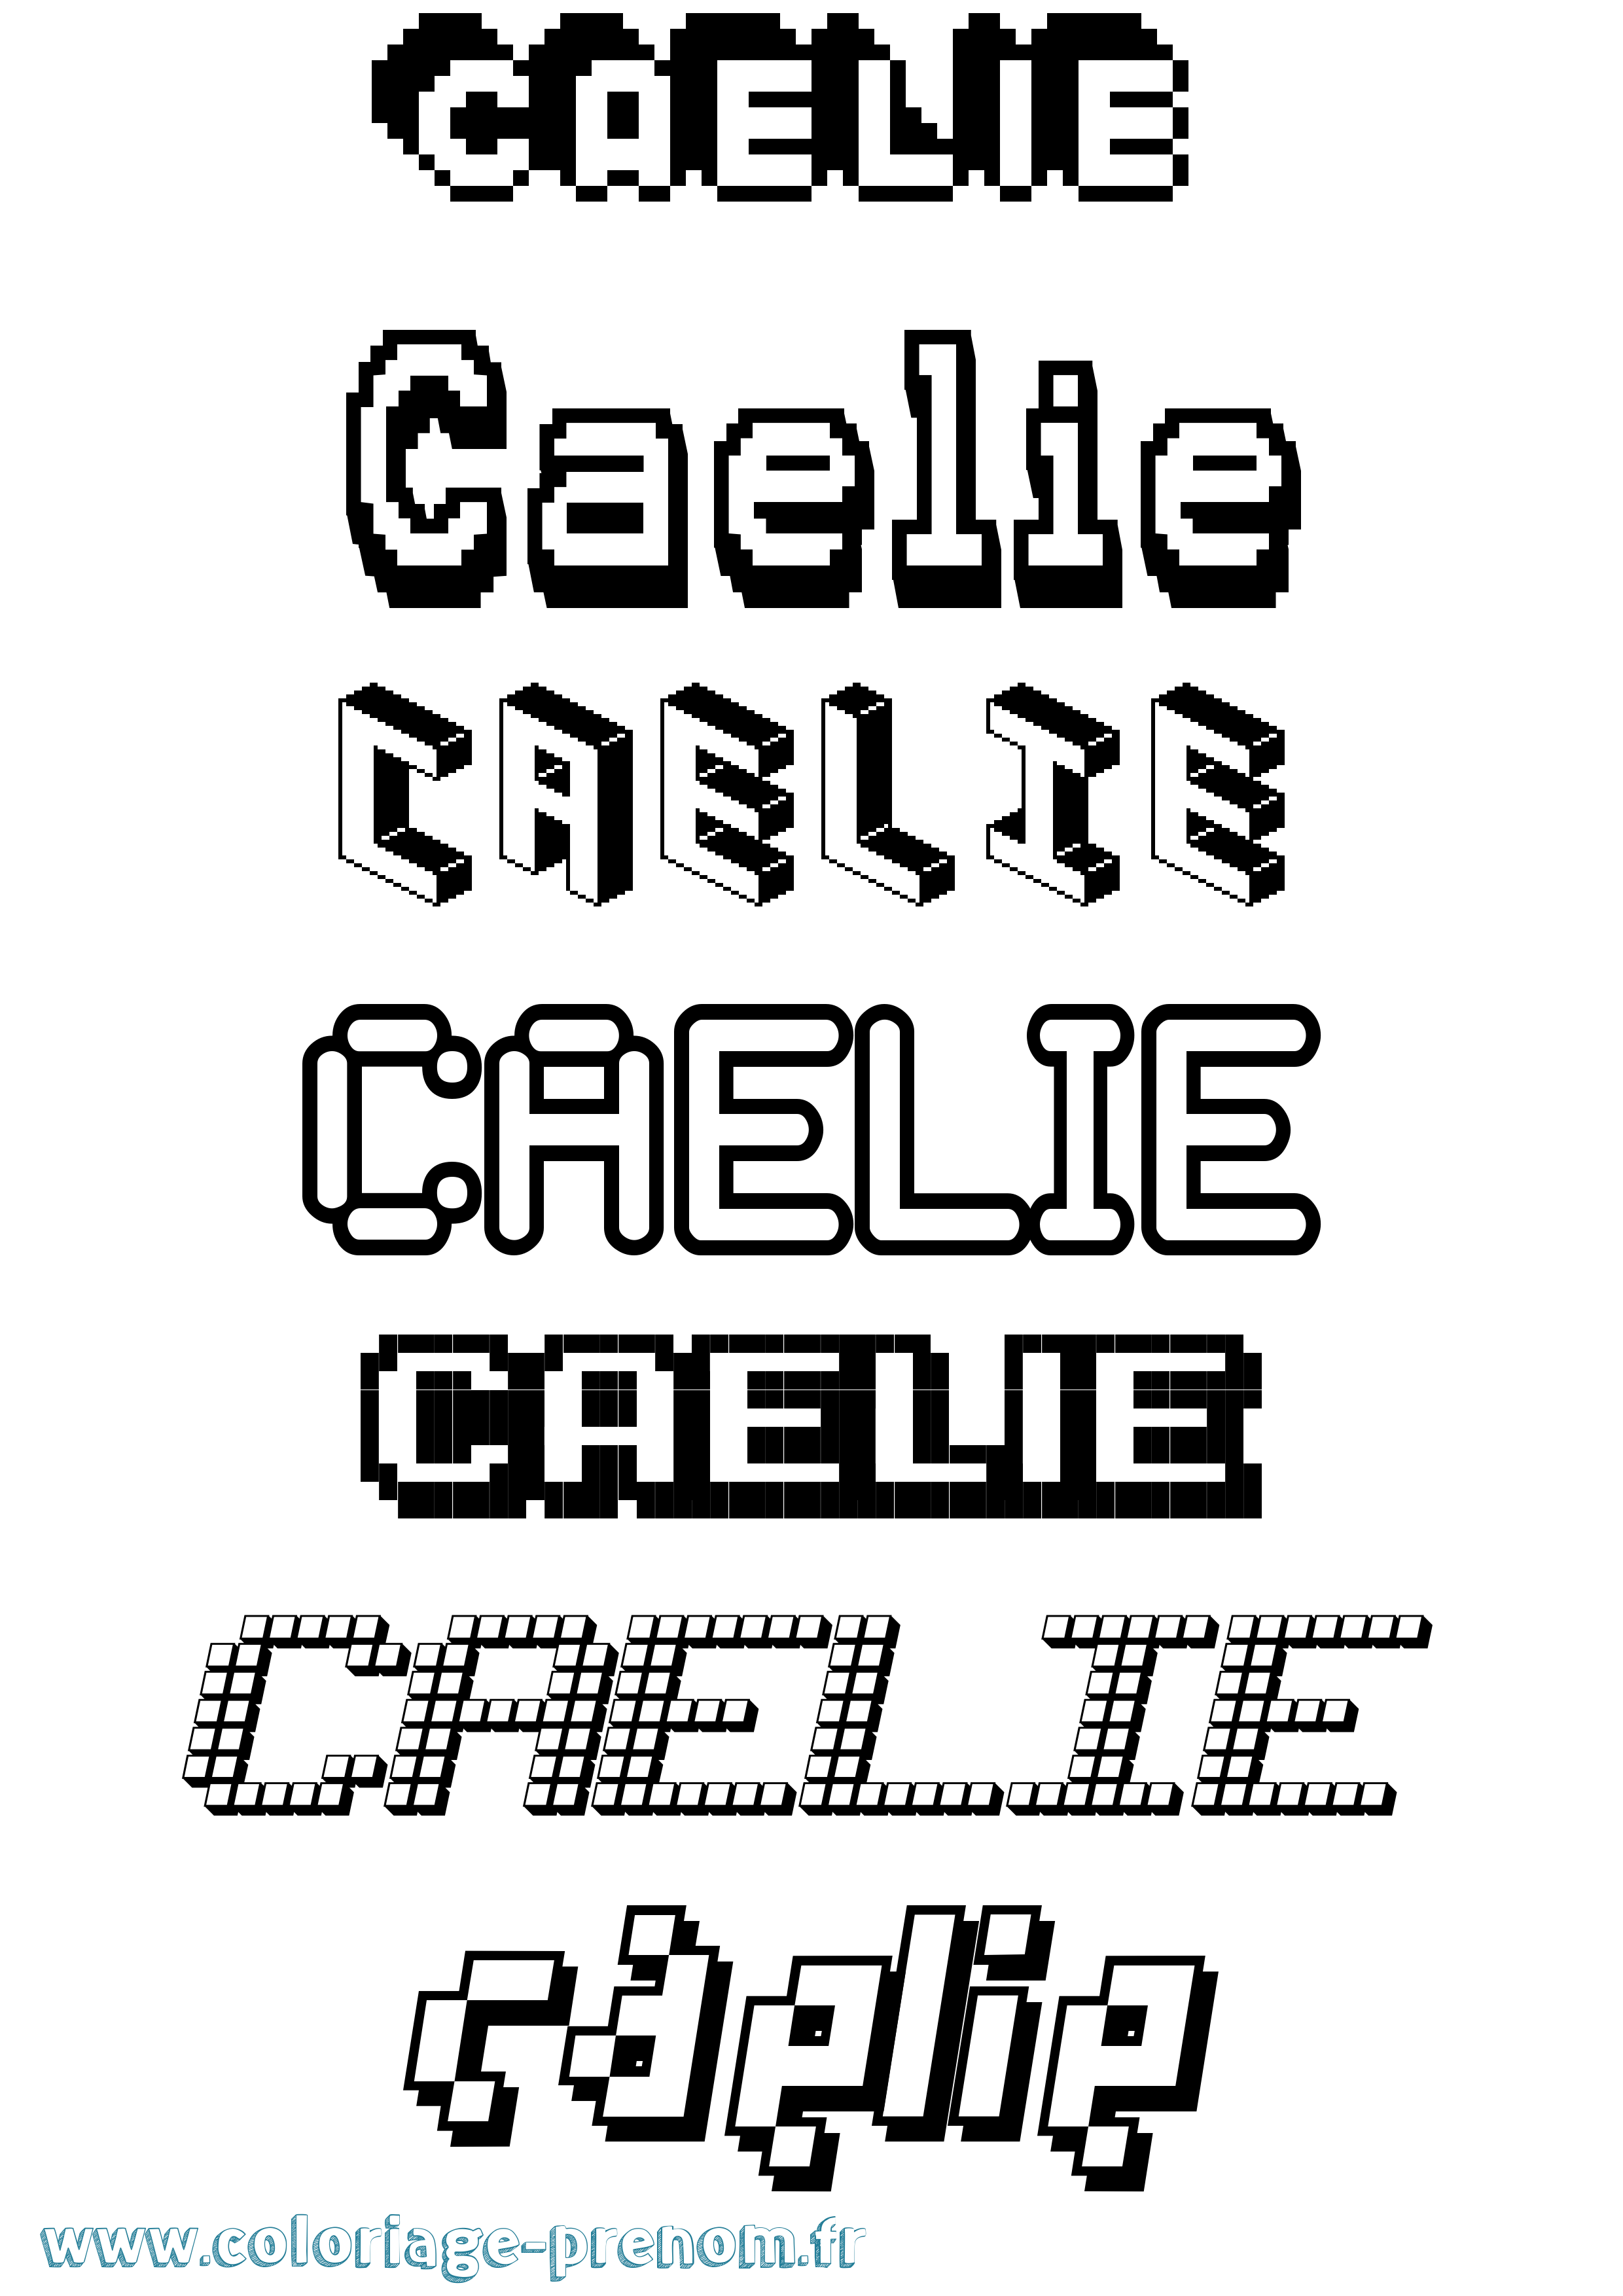 Coloriage prénom Caelie Pixel